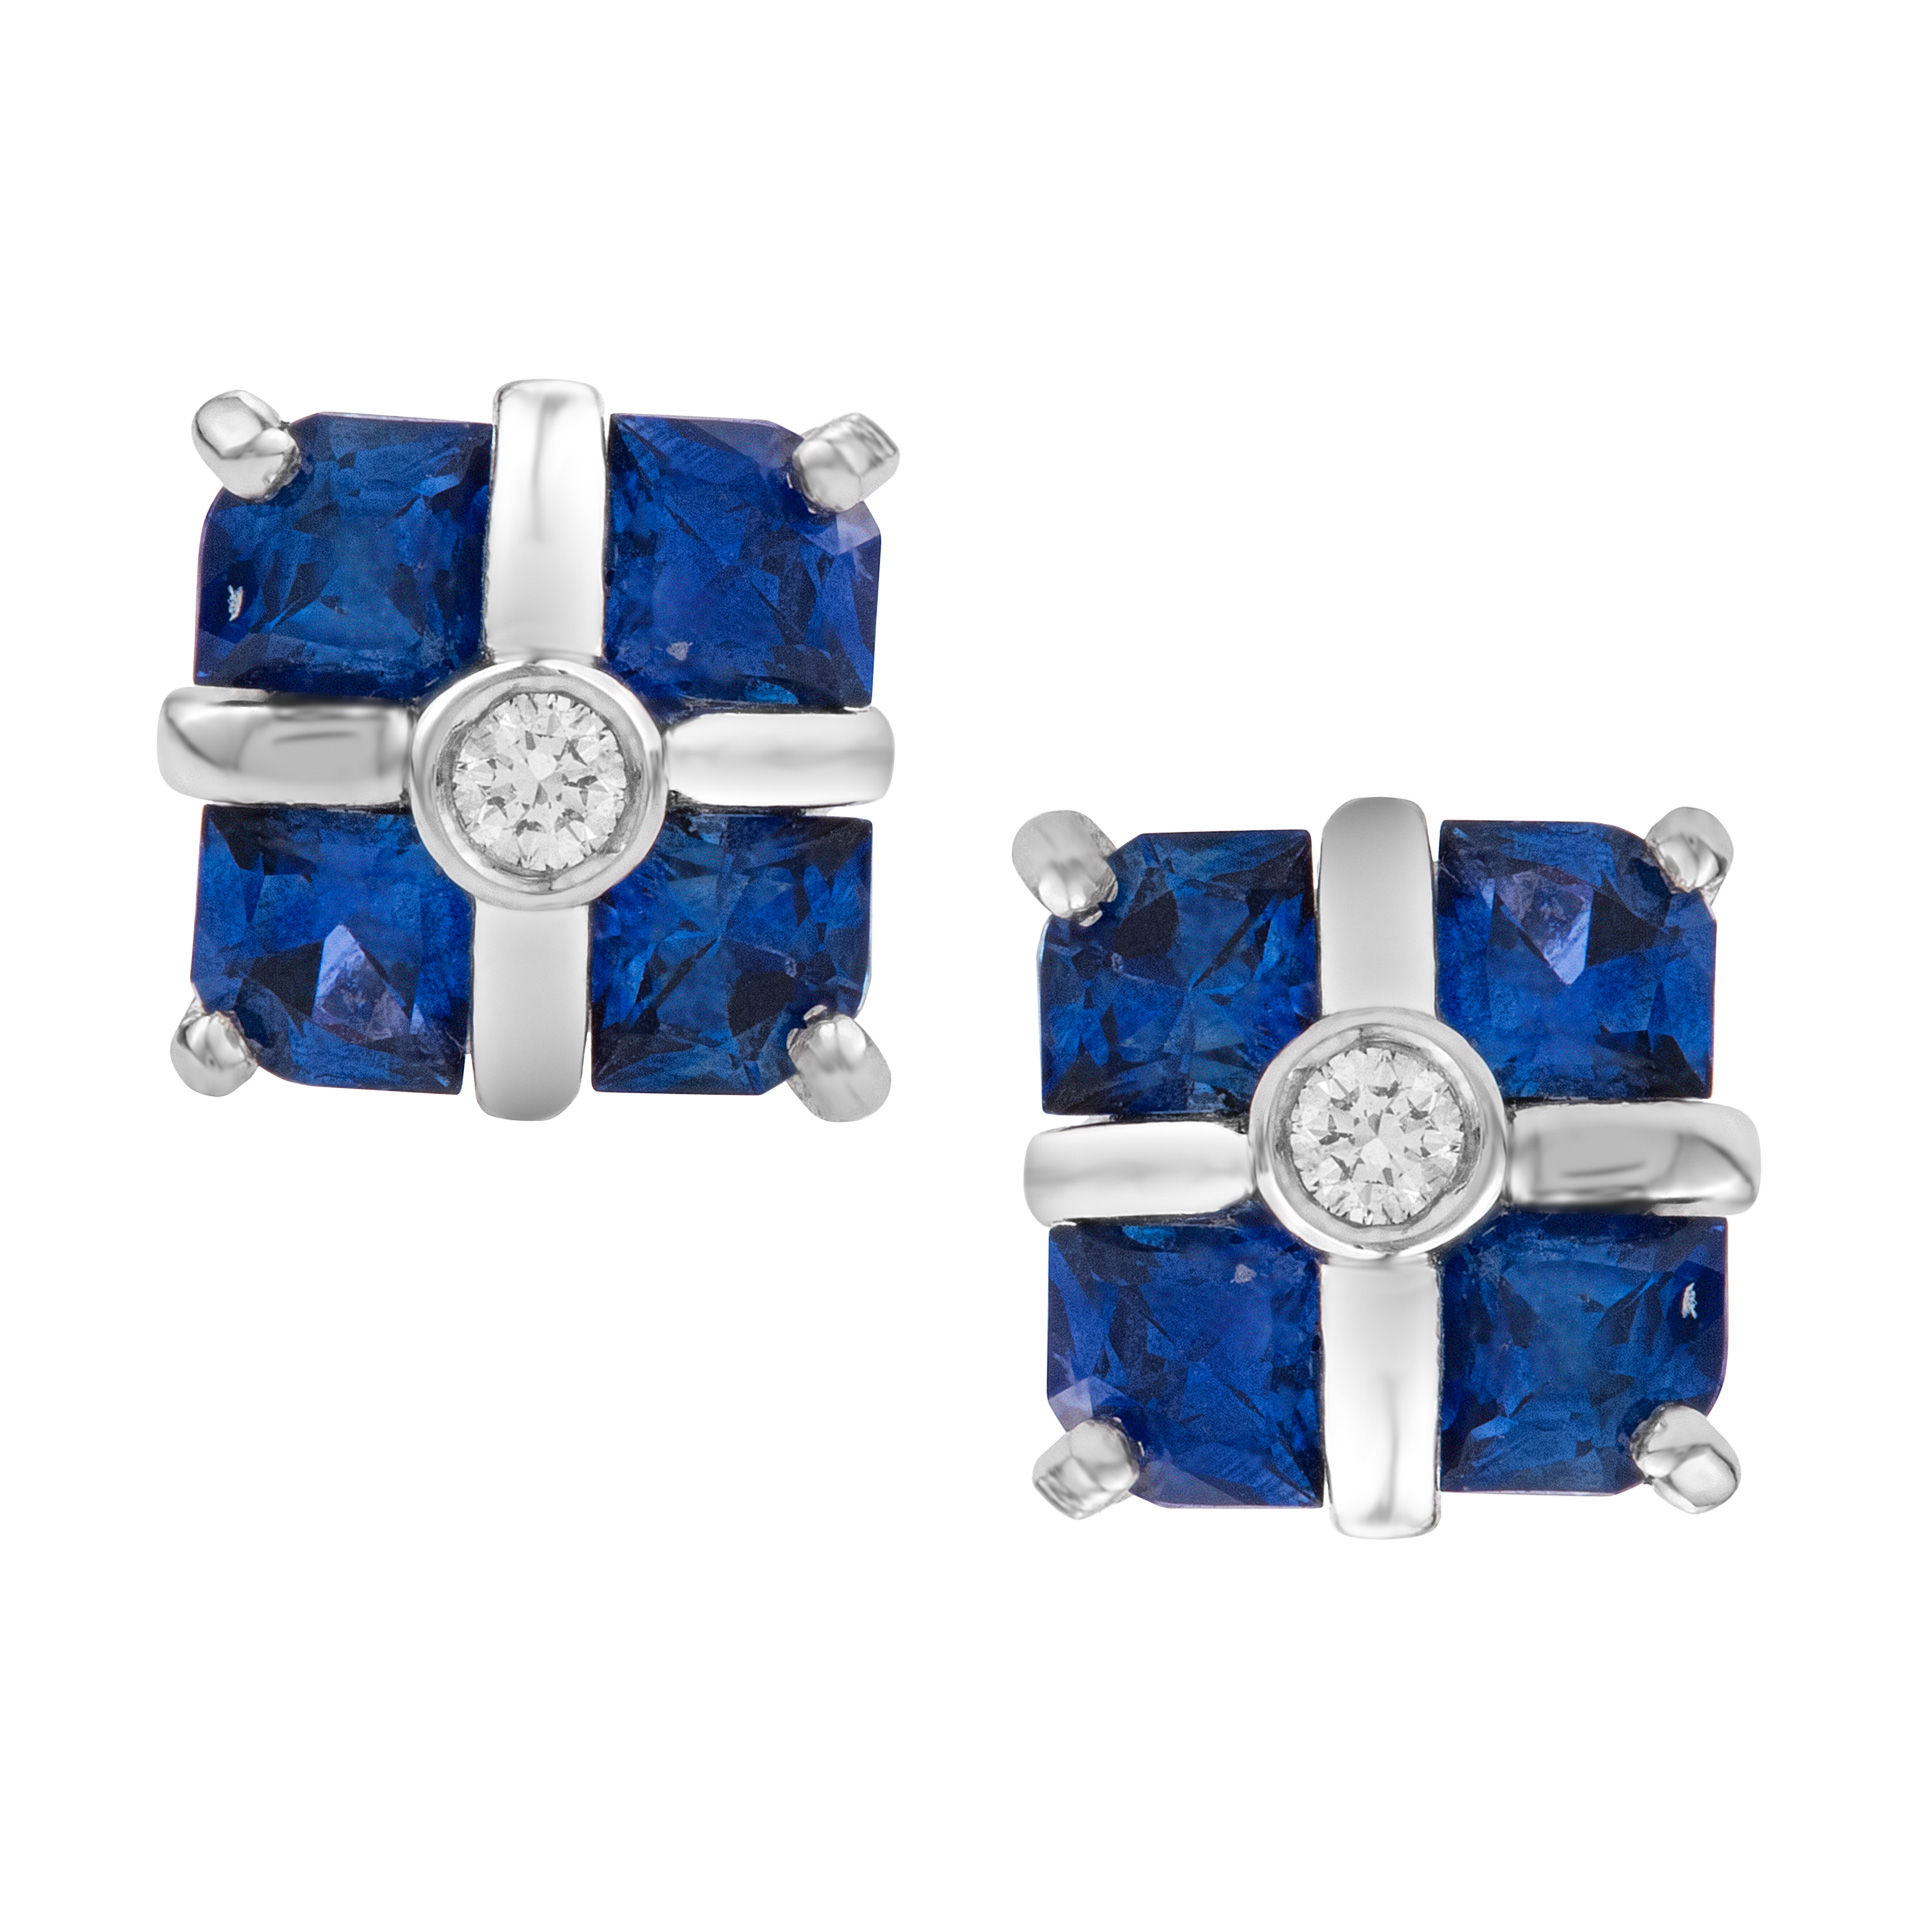 Blue sapphire & diamond stud earrings in 14k white gold